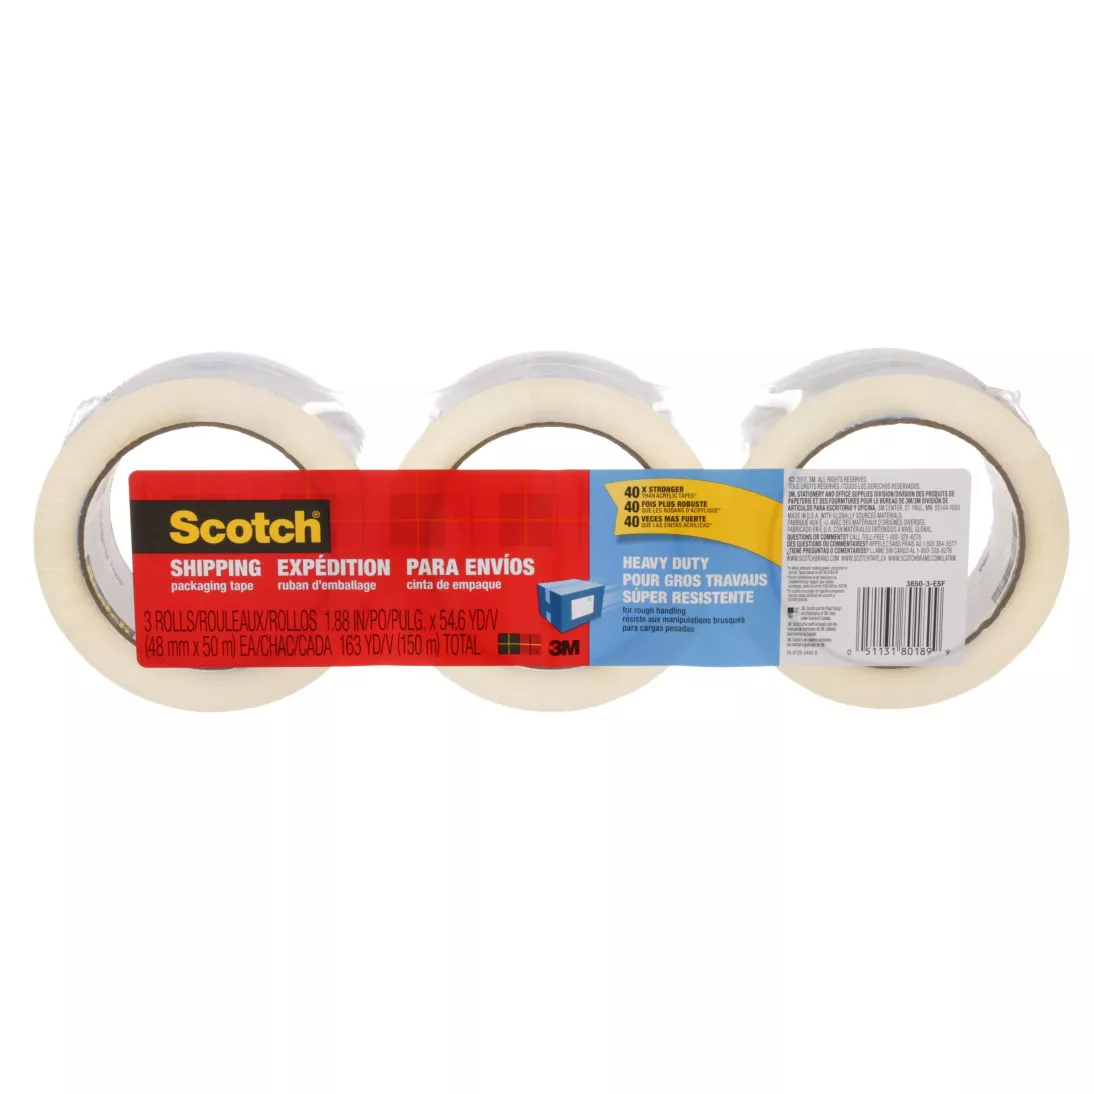 Scotch® Heavy Duty Shipping Packaging Tape 3850-3-ESF, 1.88 in. x 54.6
yd. (48 mm x 50 m)